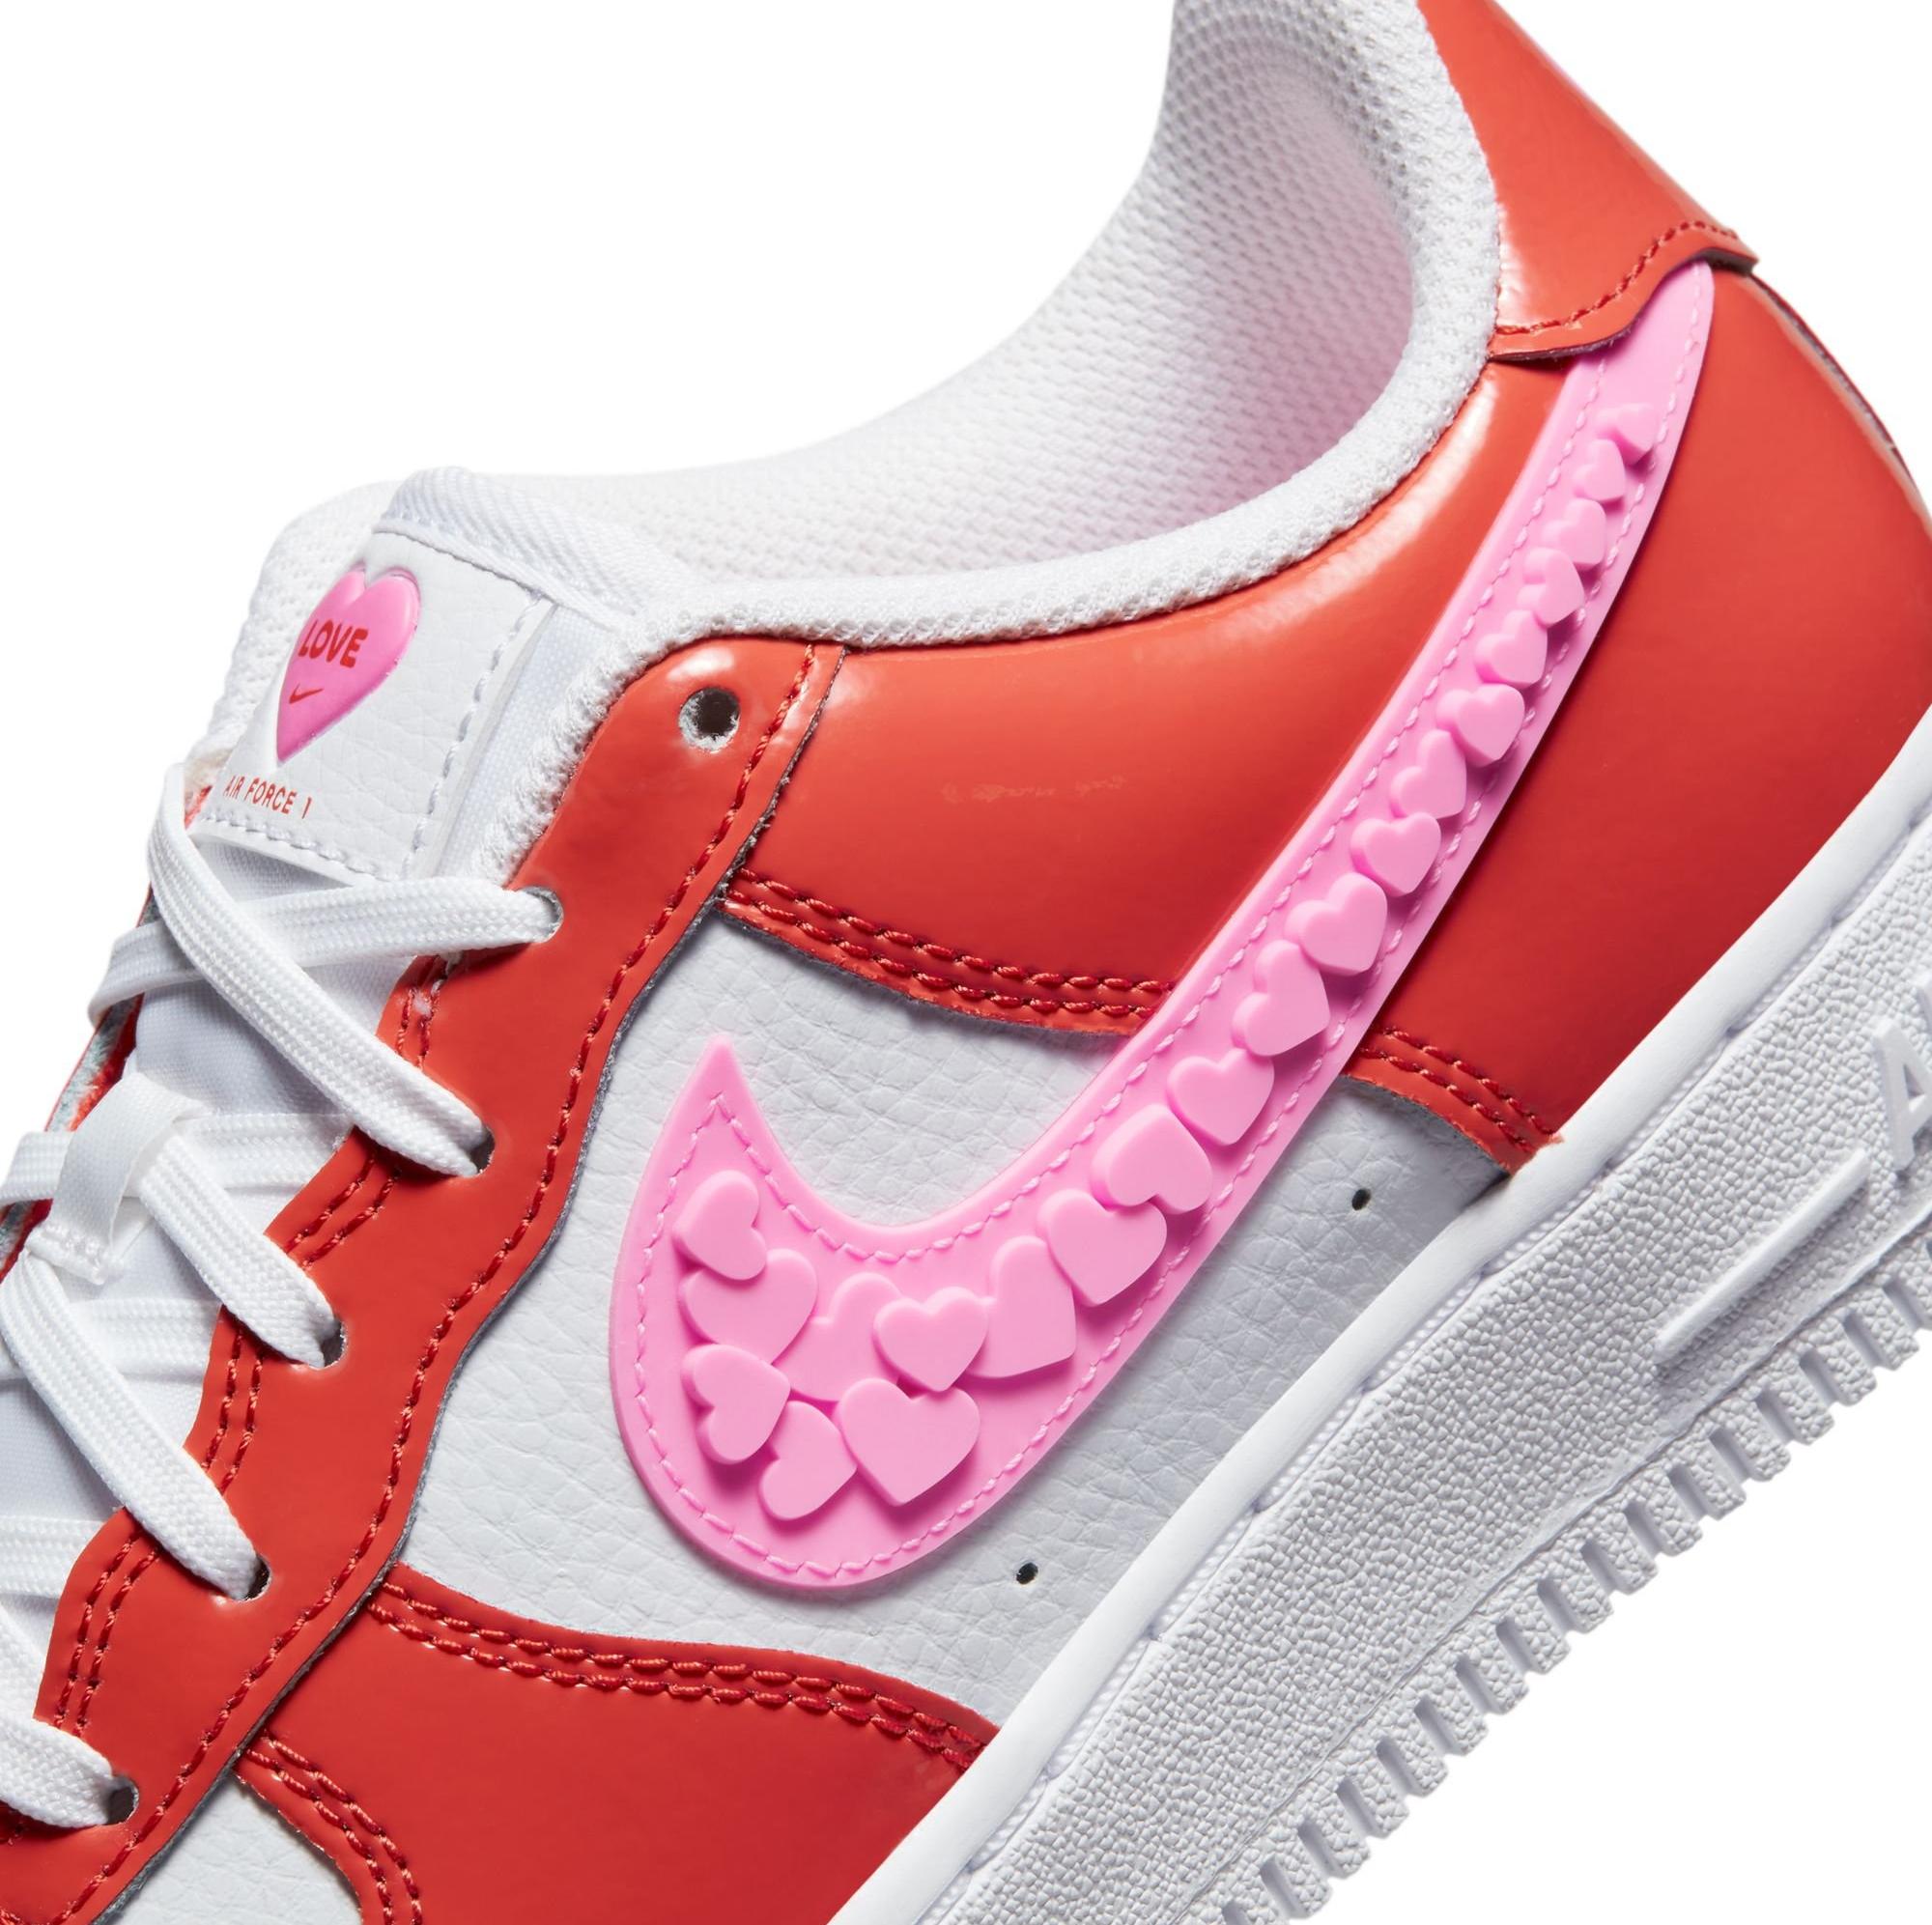 Sneakers Release – Nike Air Force 1 ’07 LV8 “White/Black”  Men’s Shoe Launching 10/13